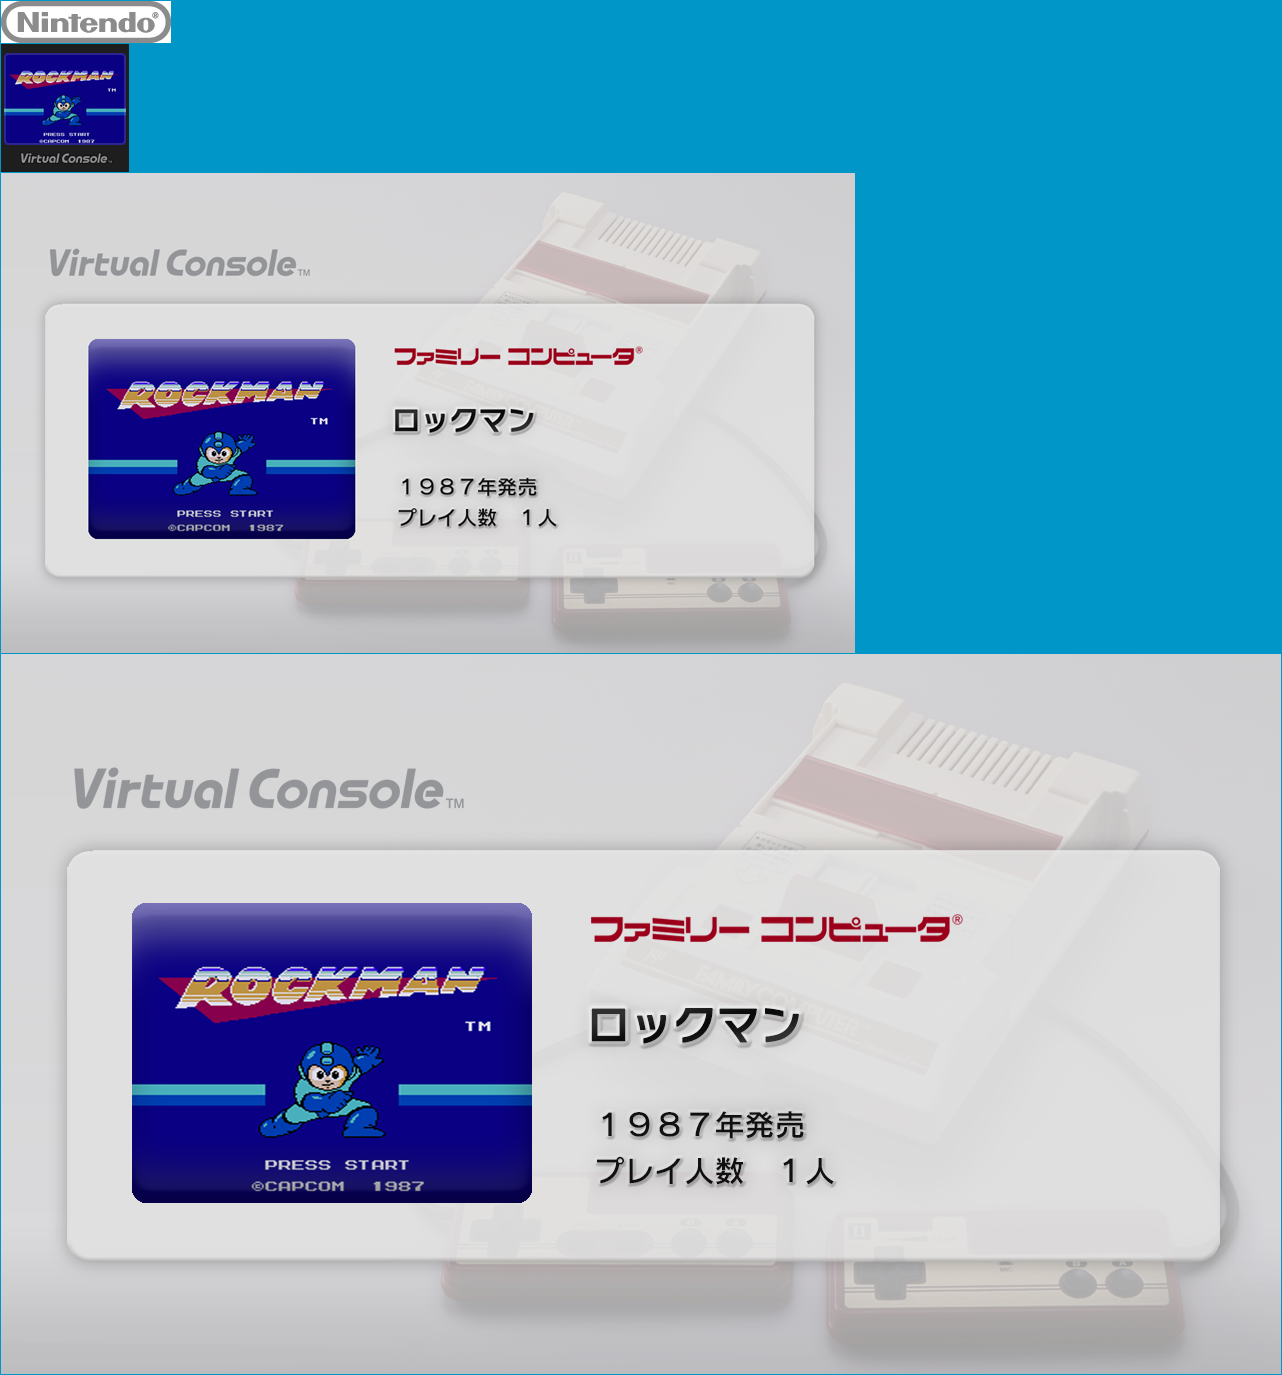 Virtual Console - Rockman